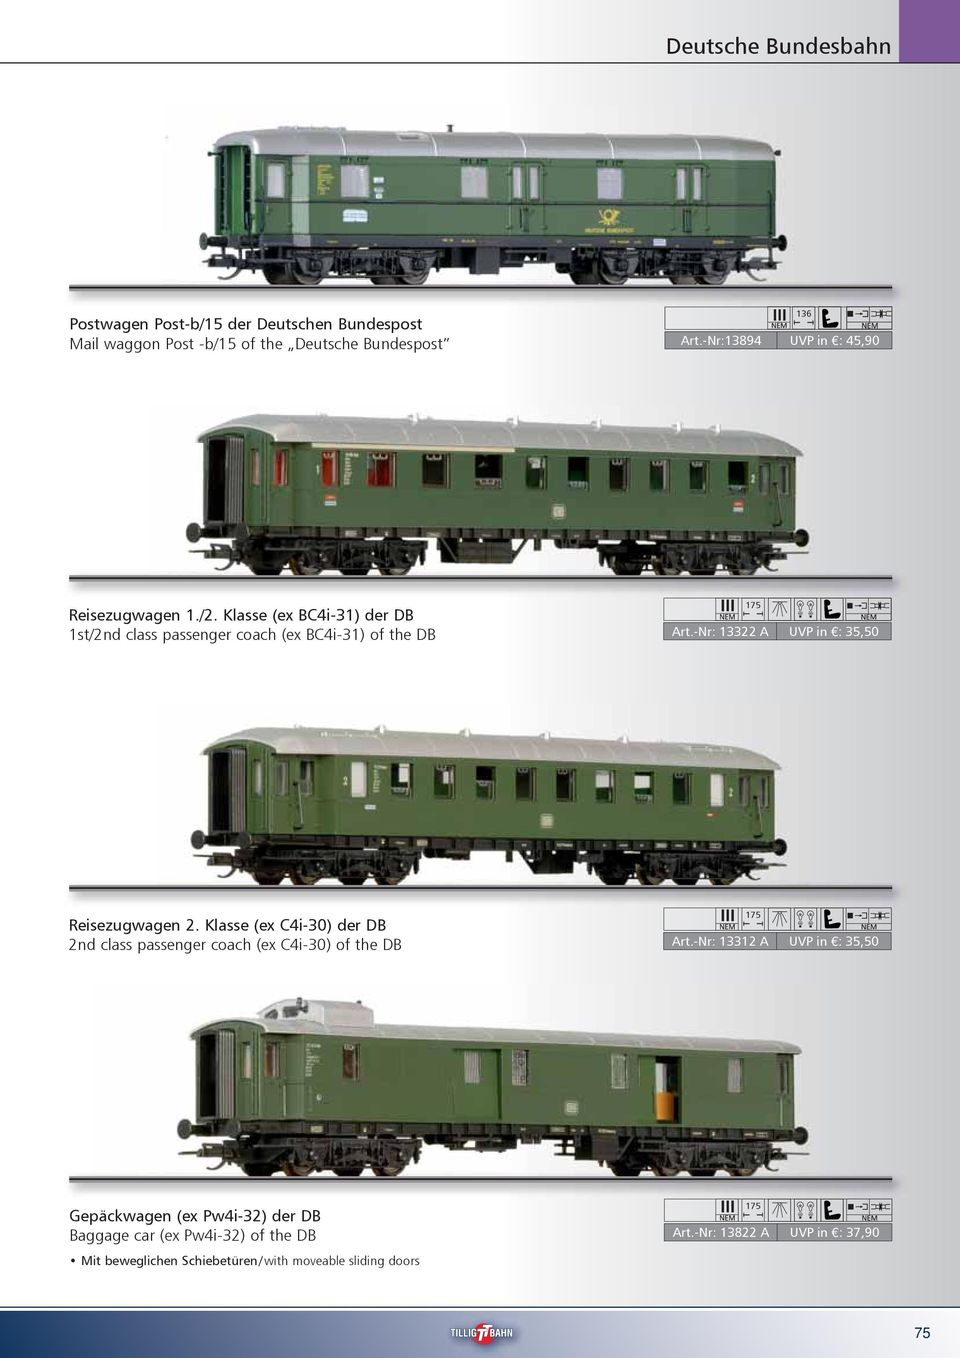 -Nr: 13322 A UVP in : 35,50 Reisezugwagen 2. Klasse (ex C4i-30) der DB 175 2nd class passenger coach (ex C4i-30) of the DB Art.